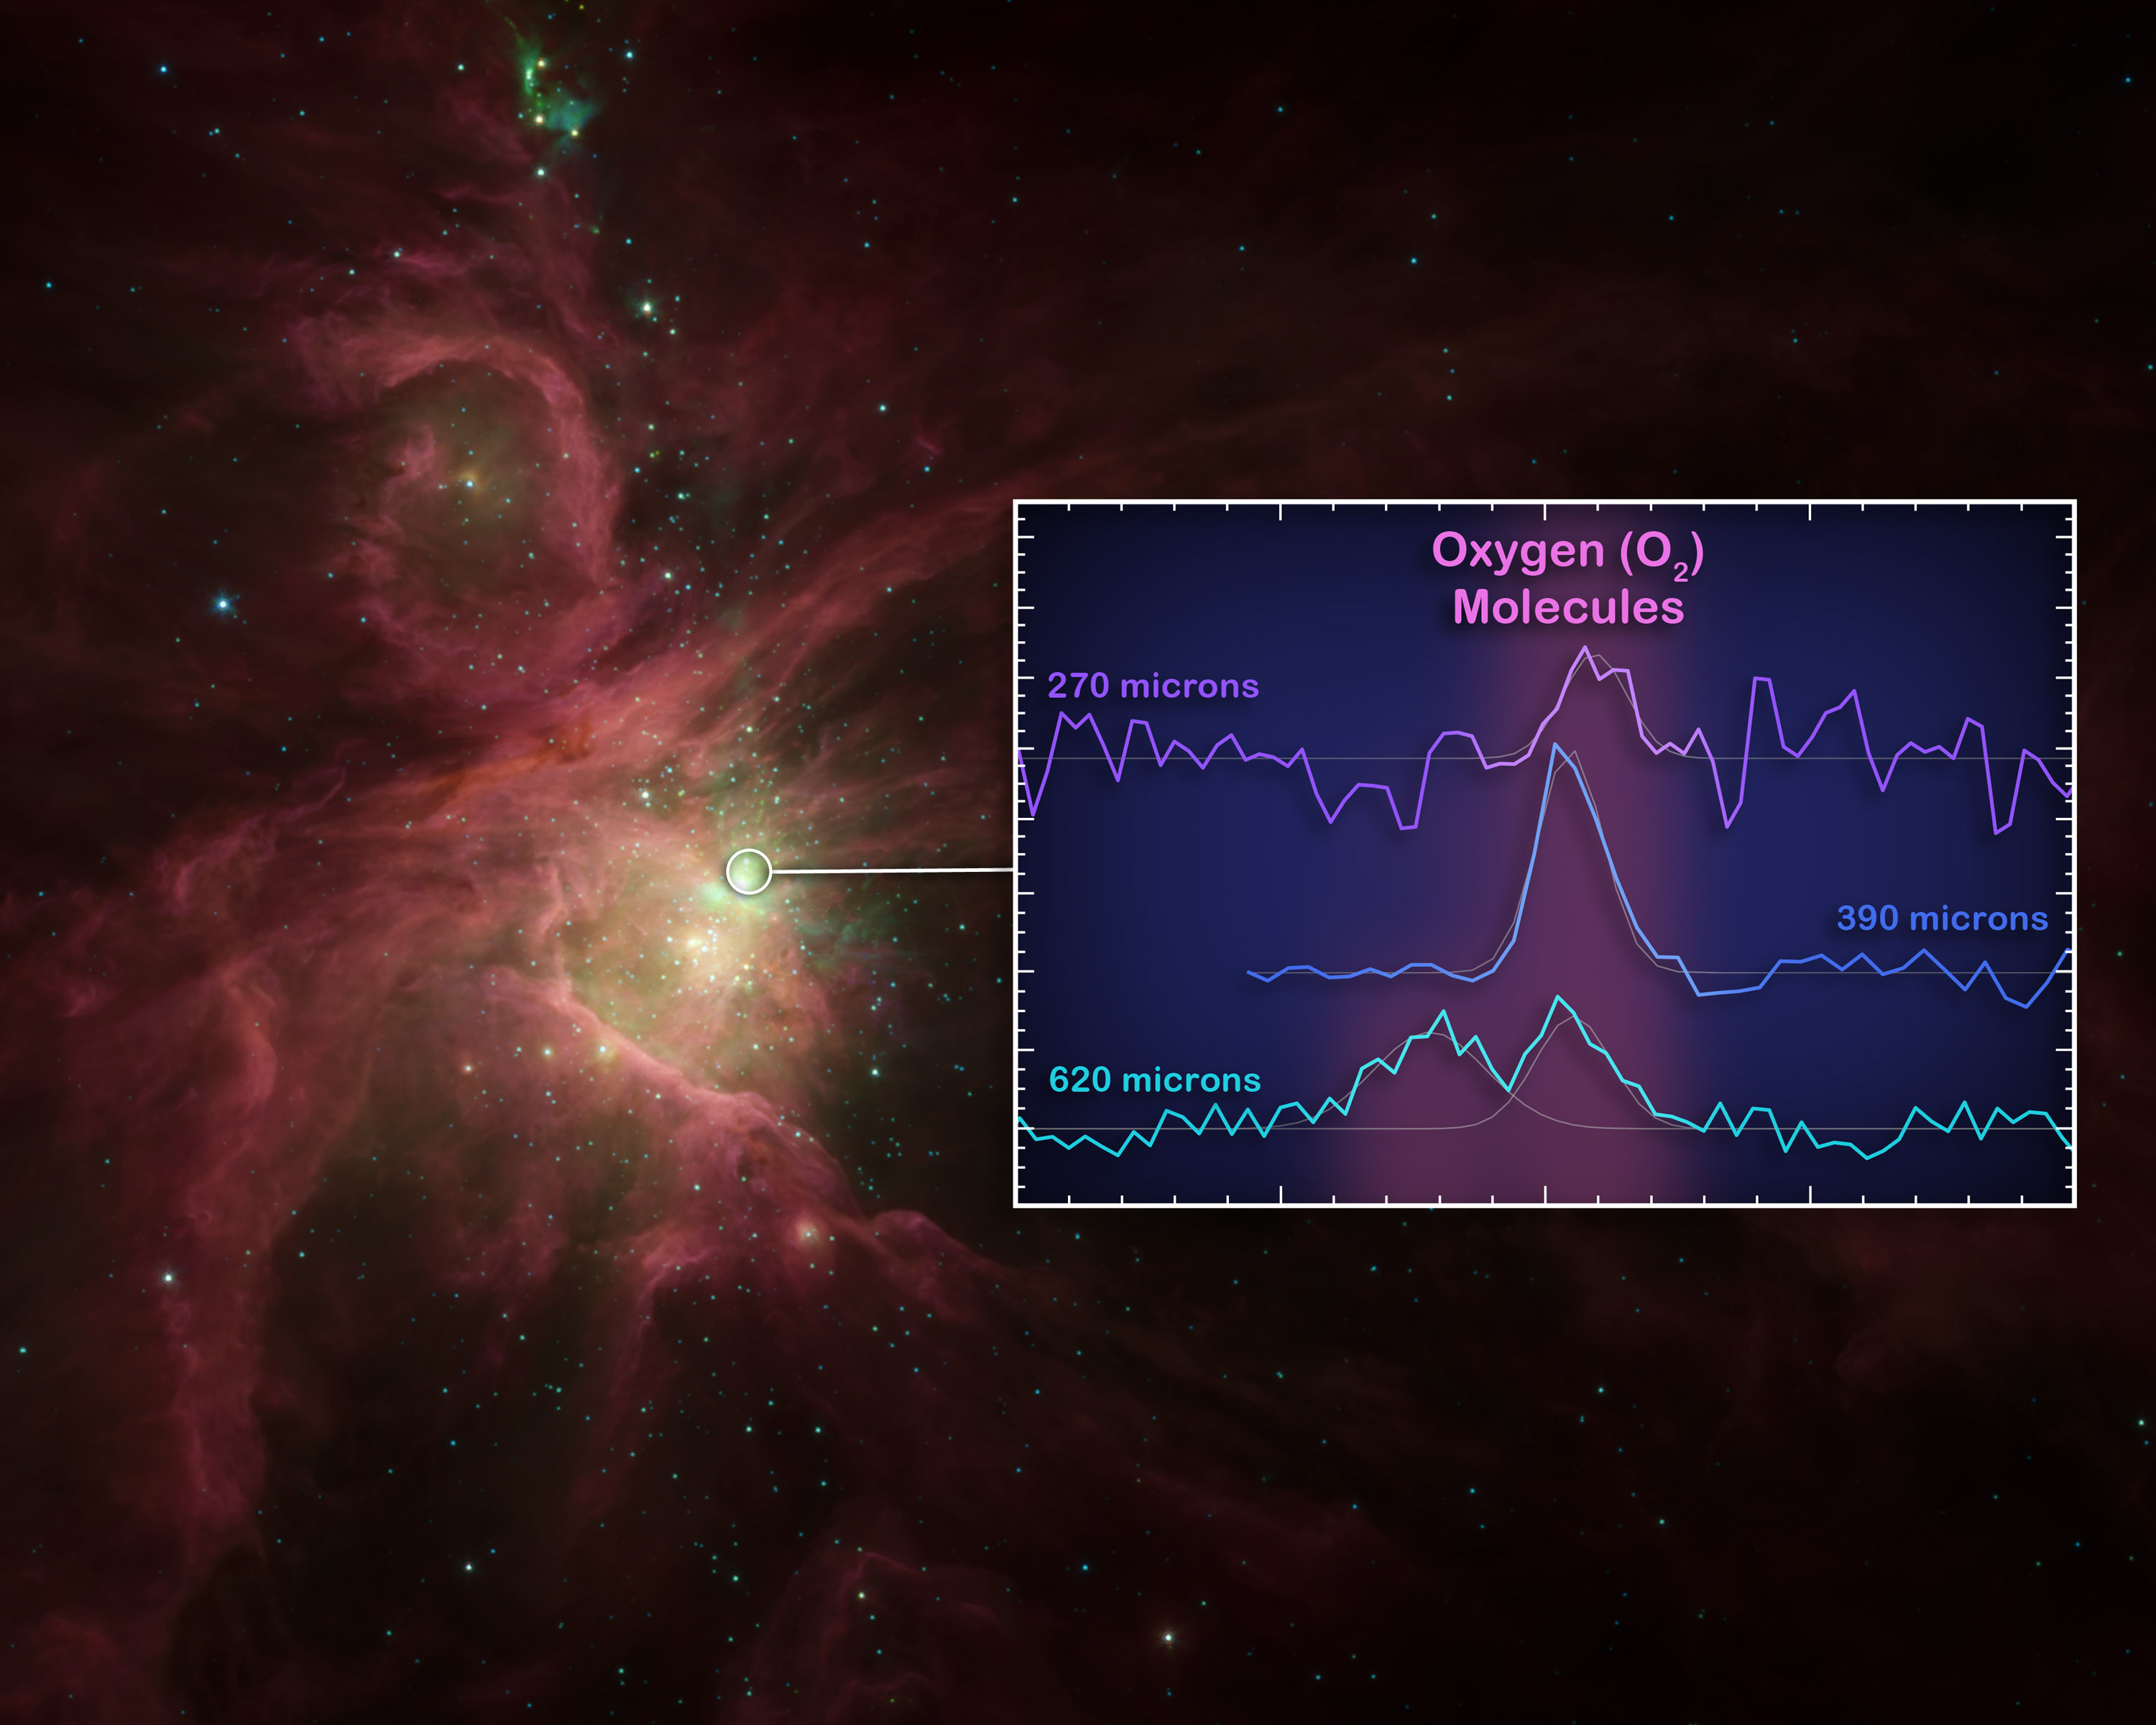 Herschel detects molecular oxygen in the Orion Nebula. Credit: ESA/NASA/JPL-Caltech